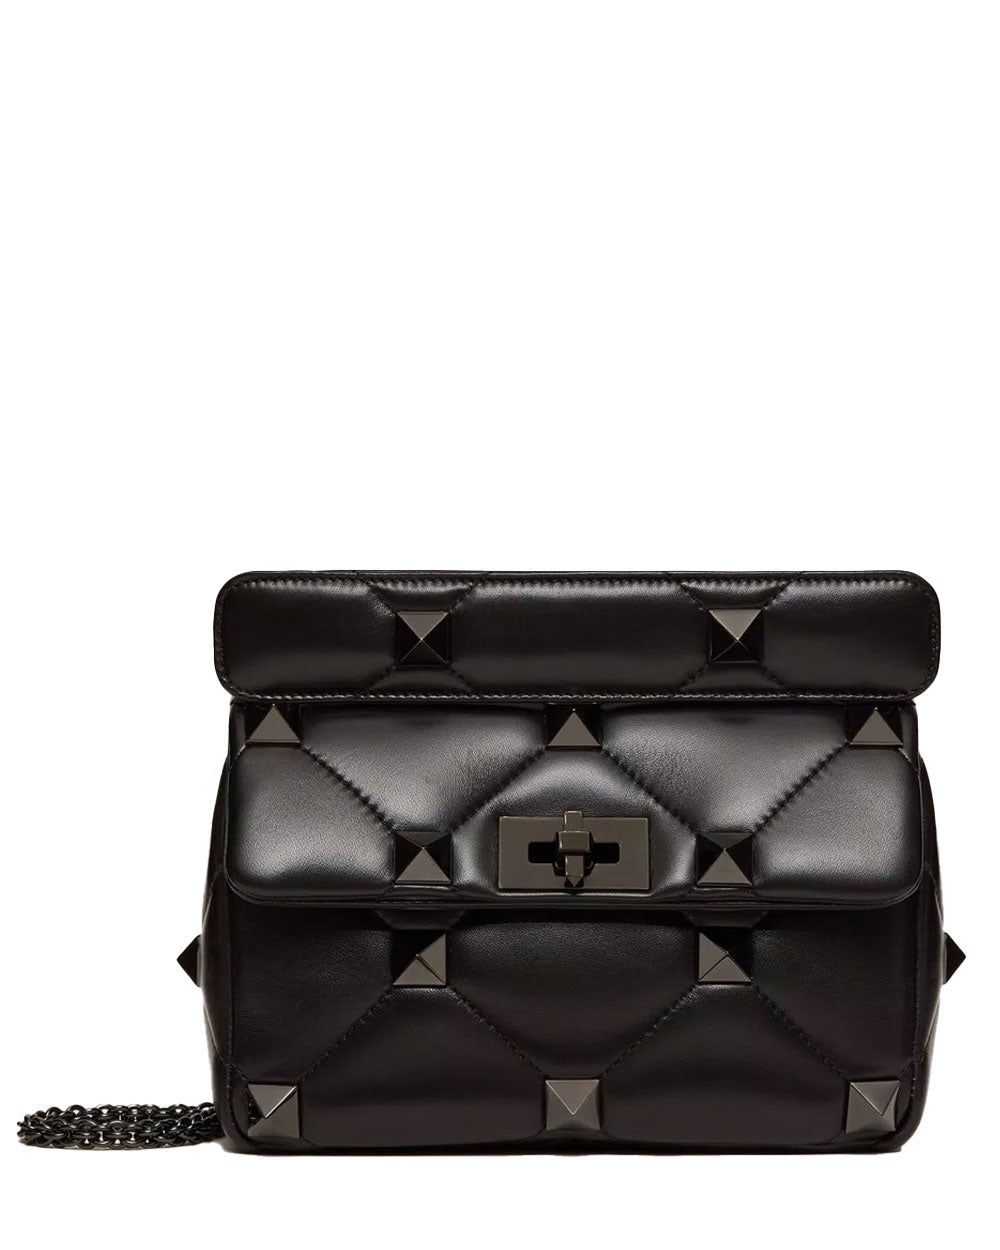 Roman Stud Medium Leather Shoulder Bag in Black - Valentino Garavani